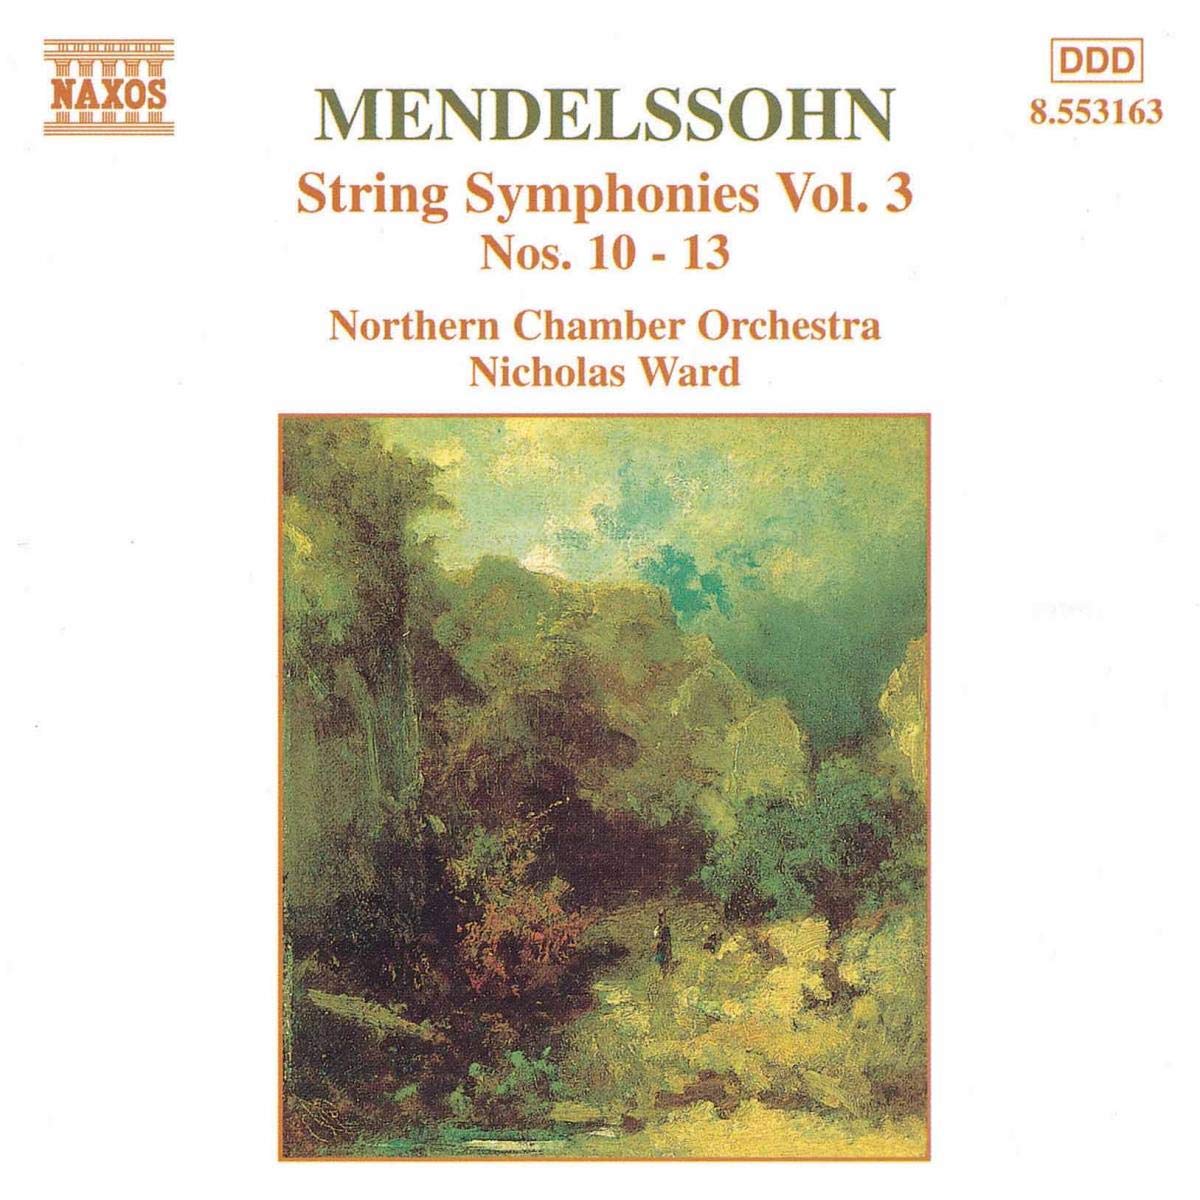 MENDELSSOHN: String Symphony vol. 3